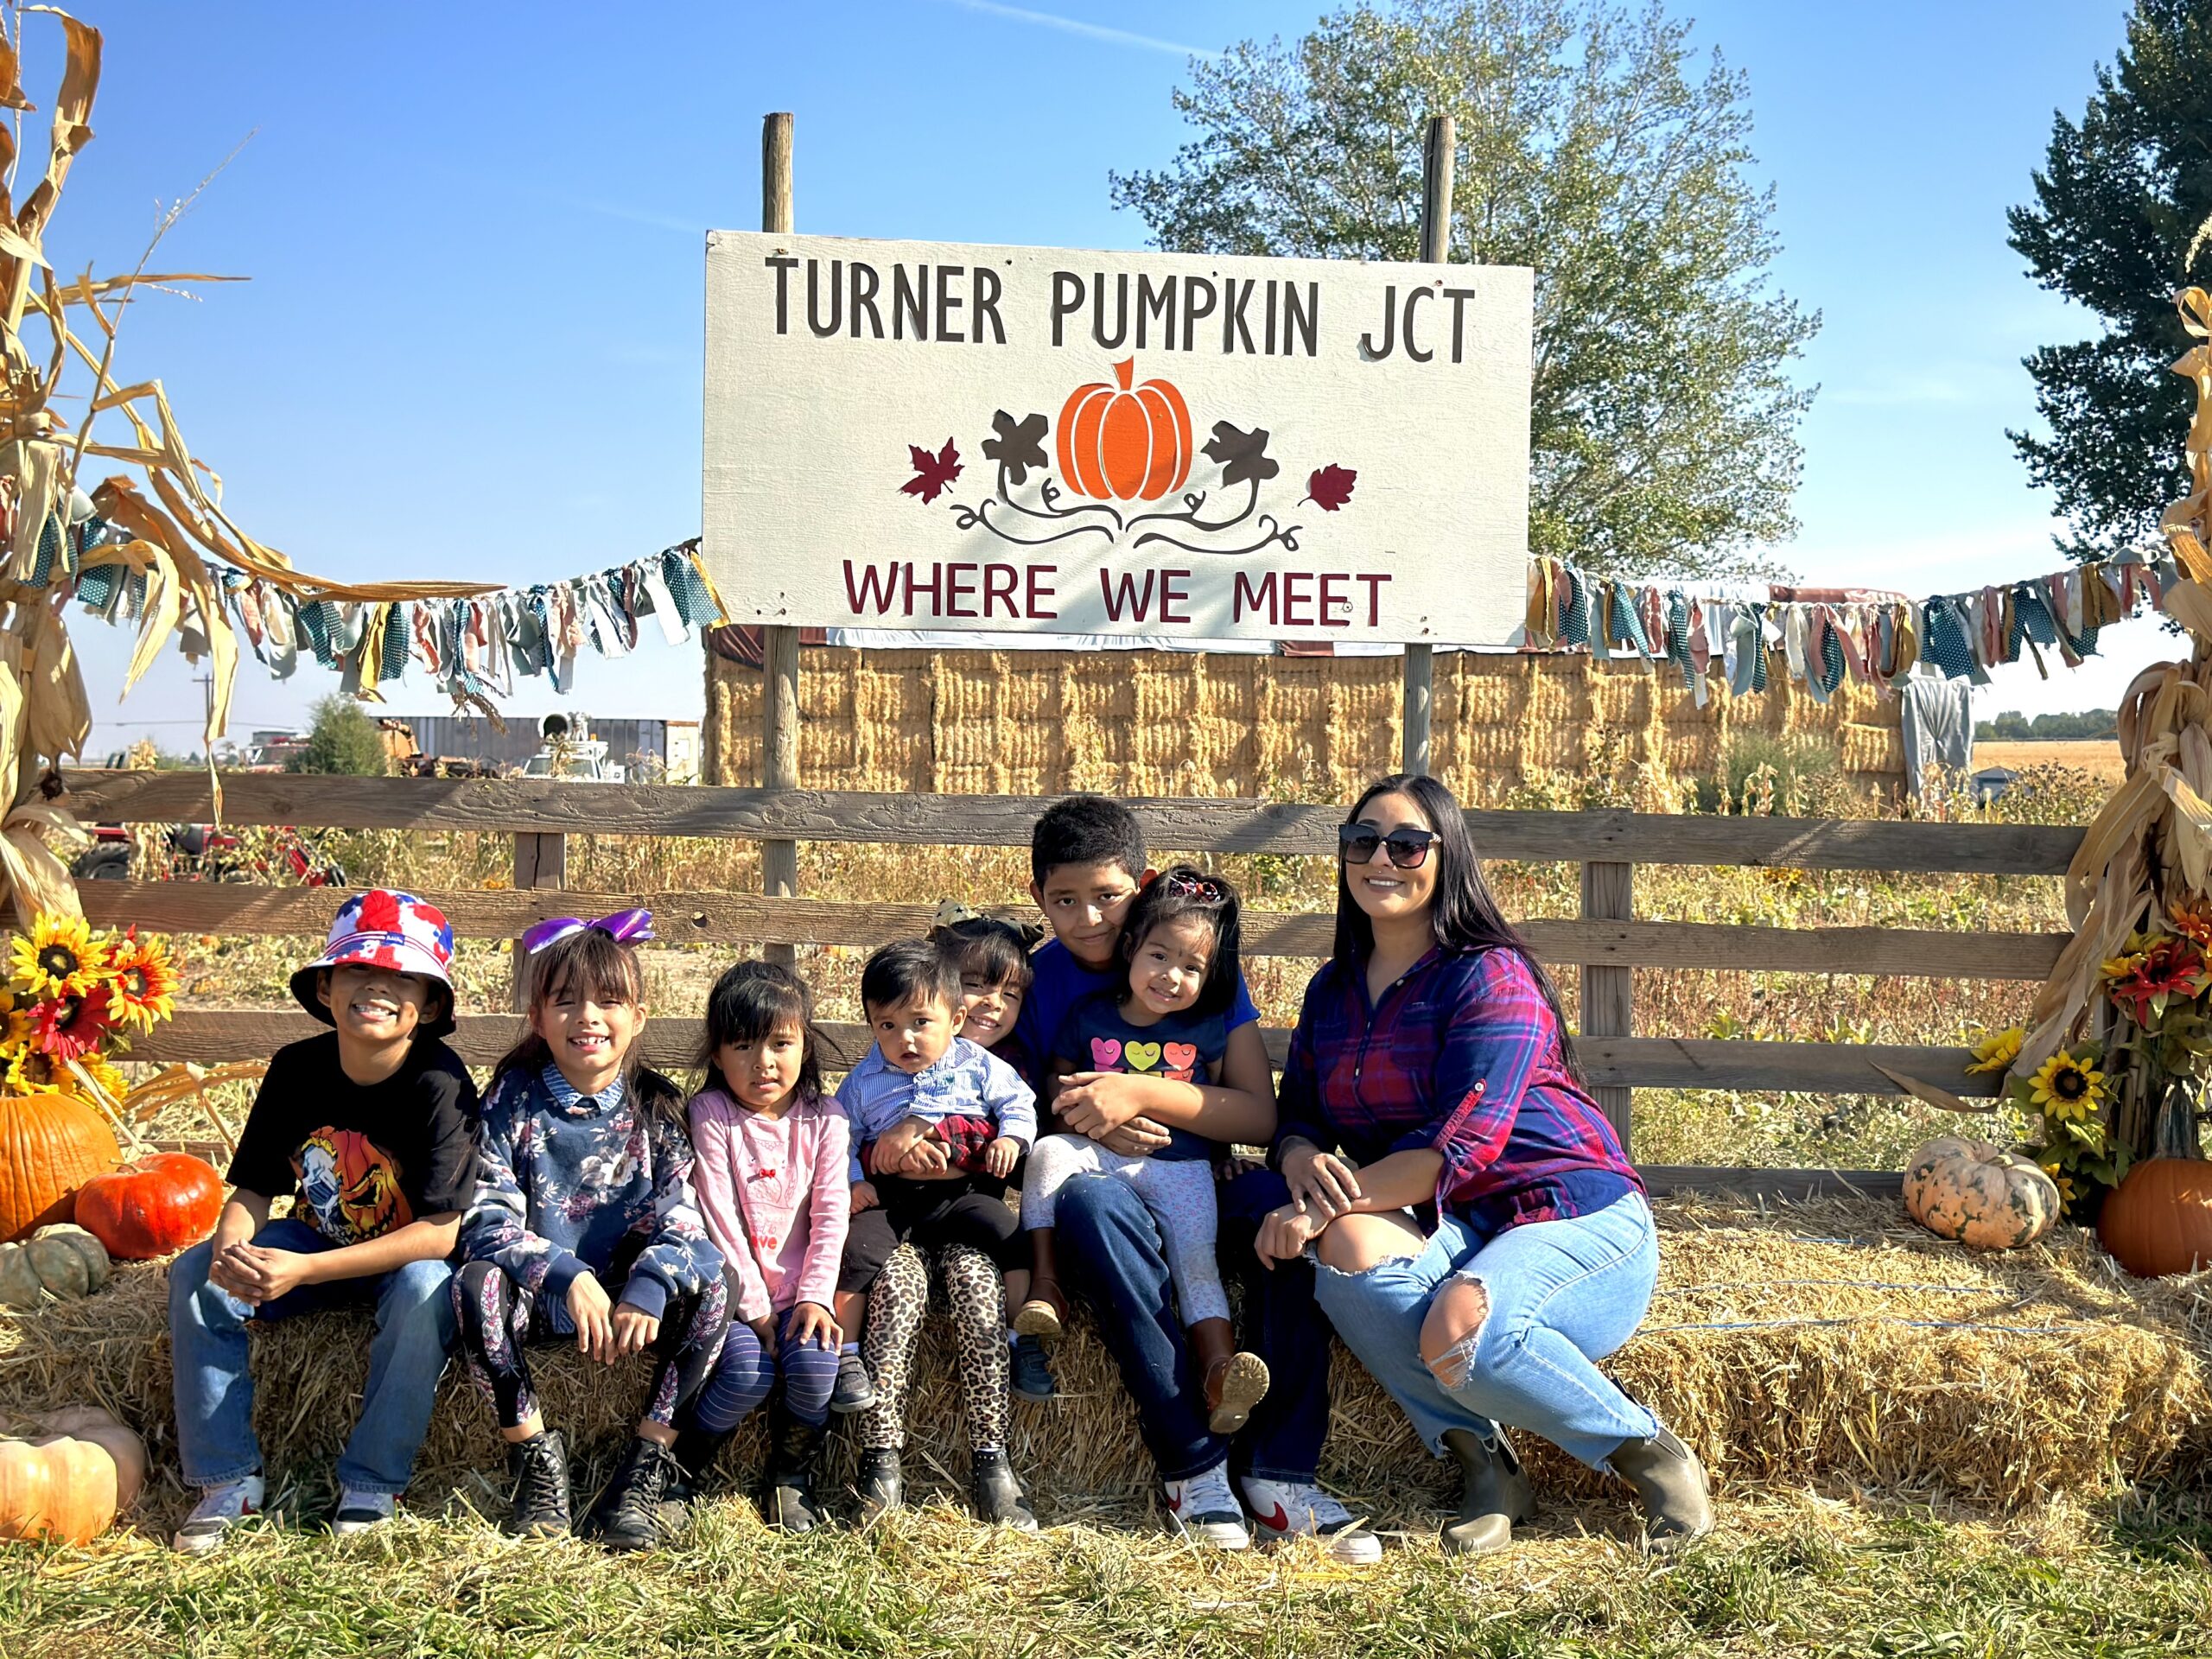 Turner pumpkin junction -063